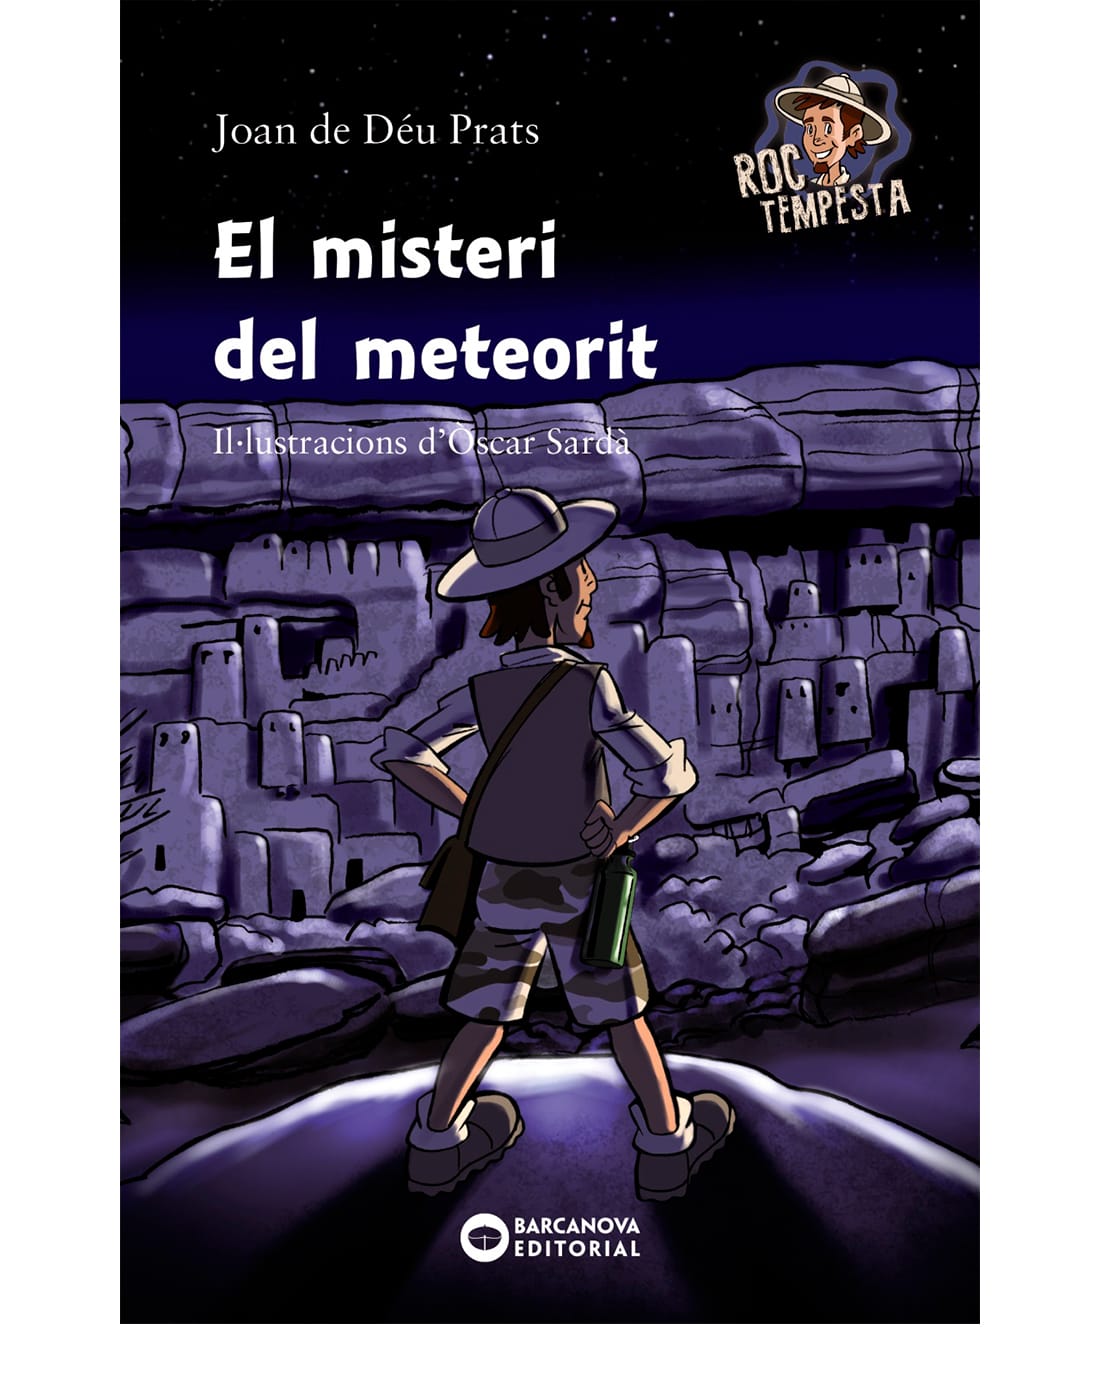 El misteri del meteorit